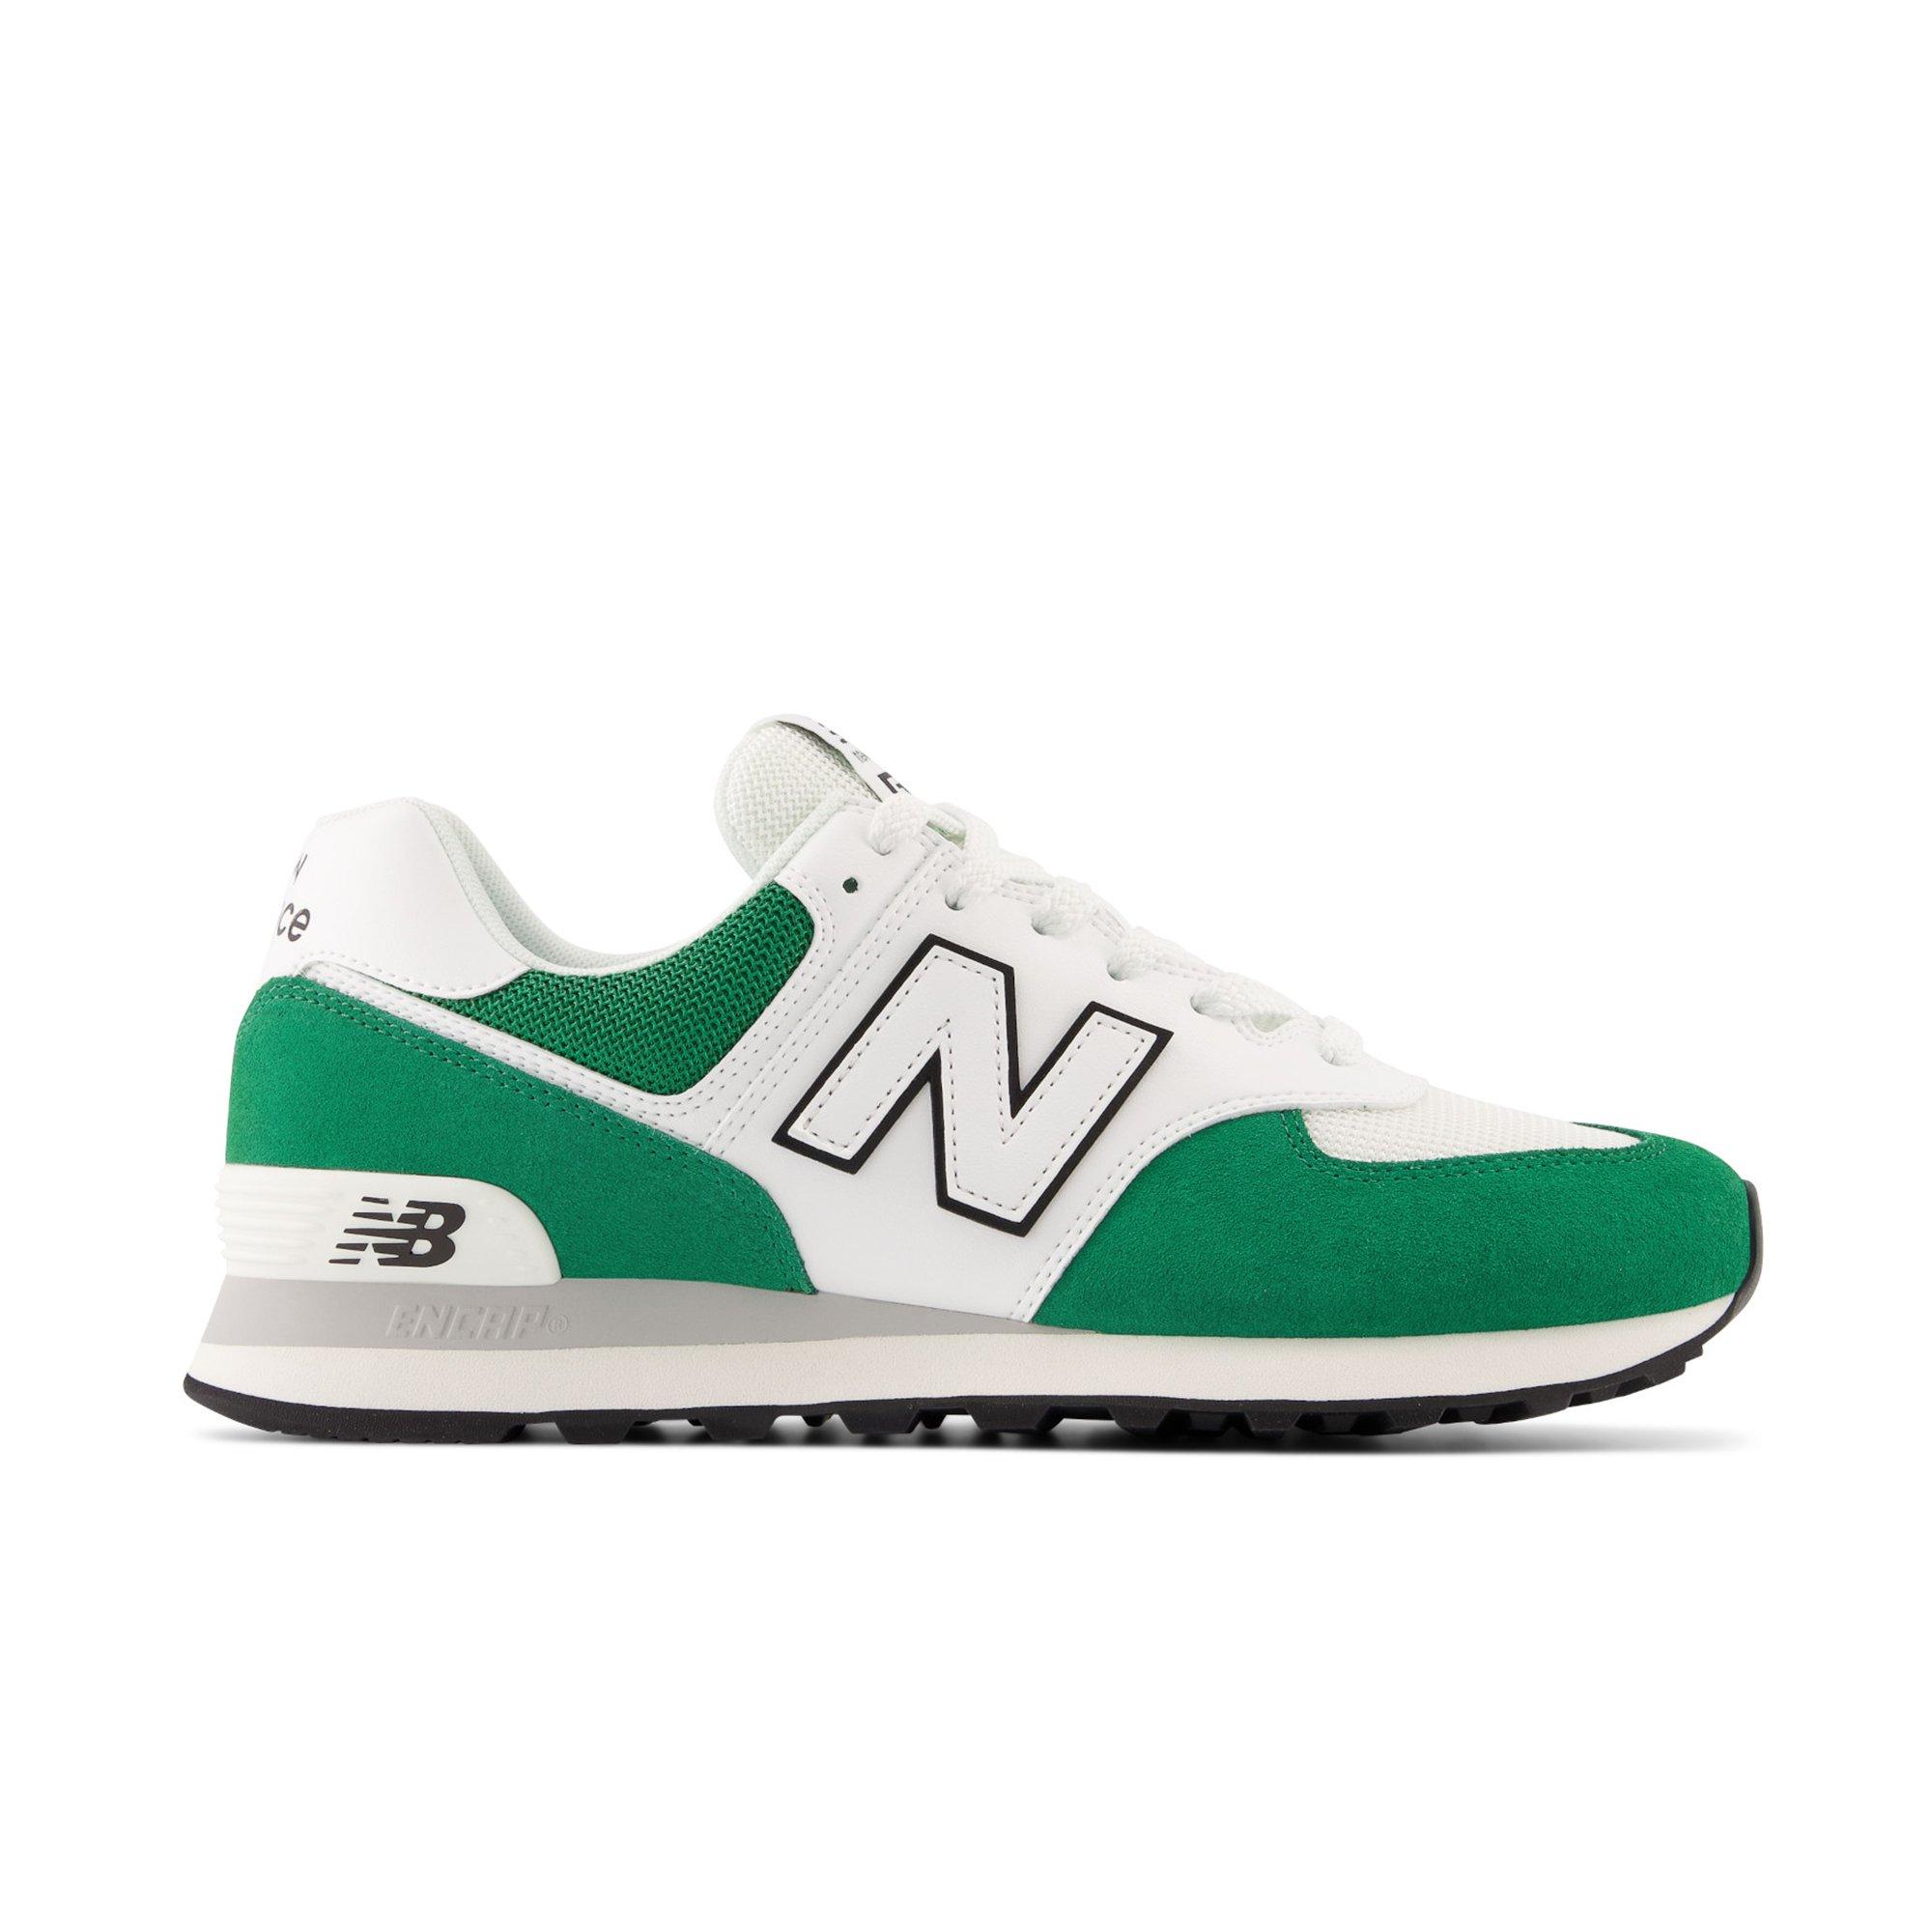 New Balance Green/White" Men's Shoe